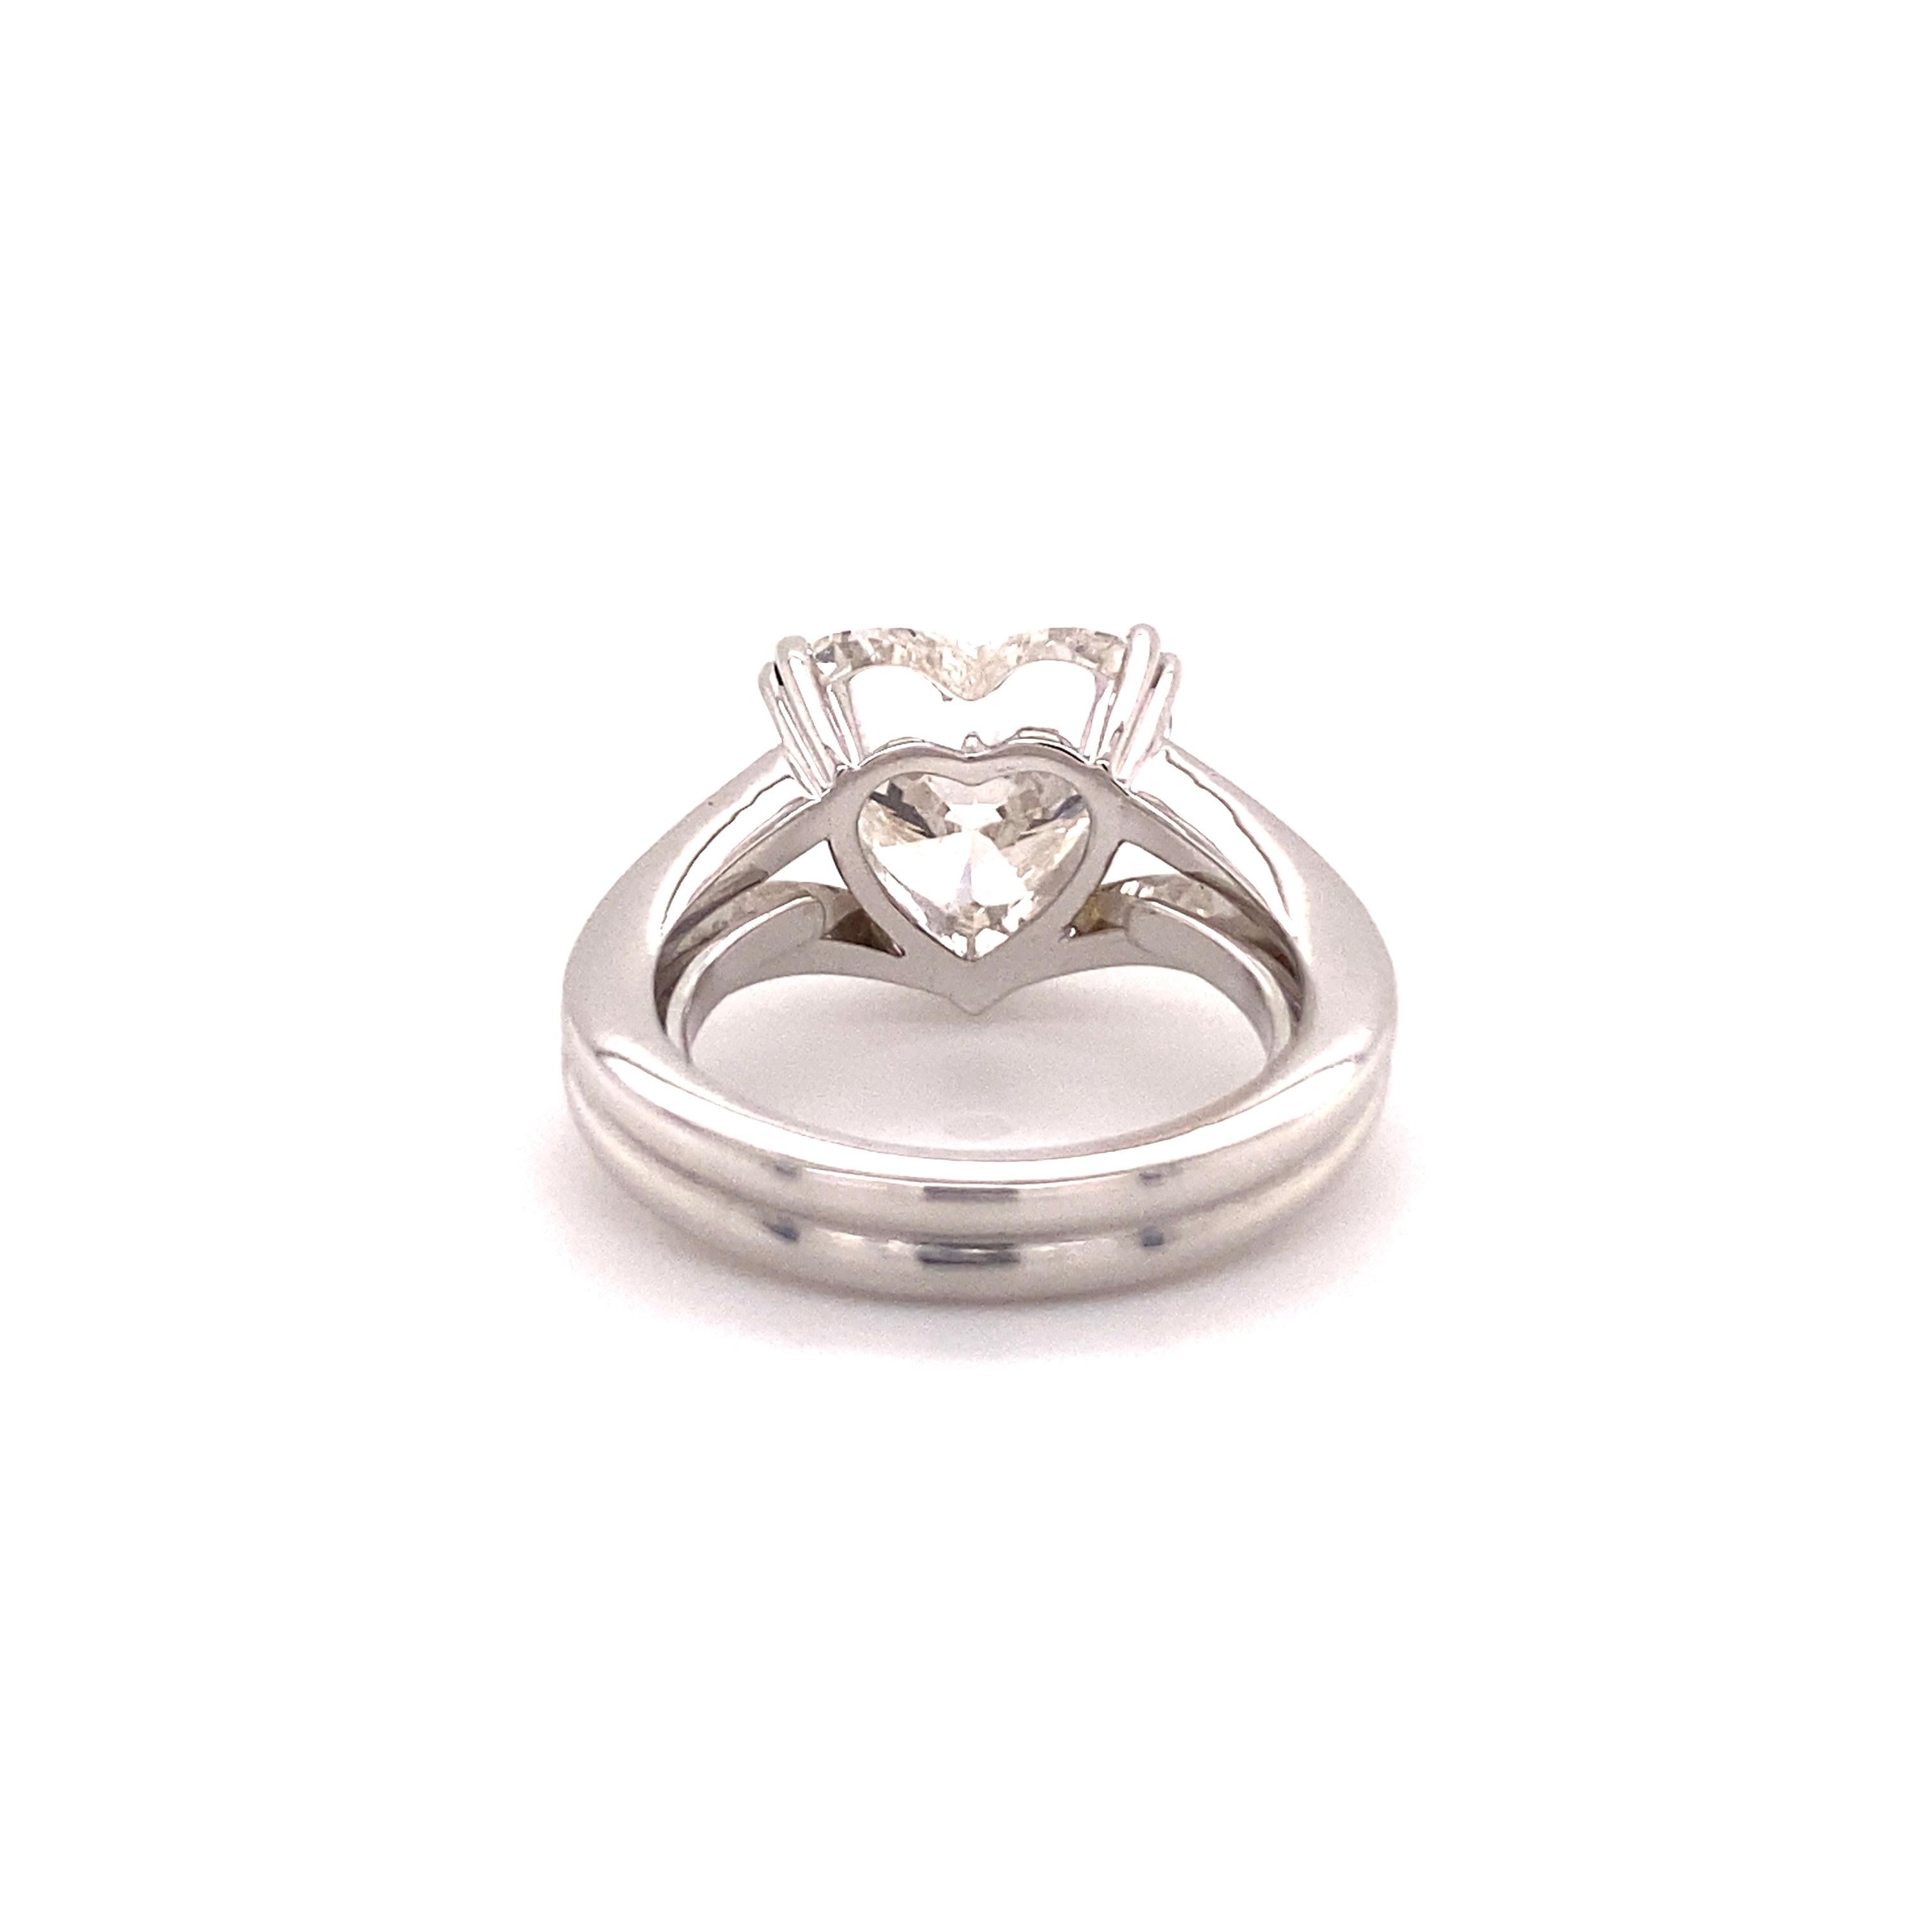 Heart Cut GIA Certified 5.04 Carat Heart-Shaped Diamond Ring in 18 Karat White Gold